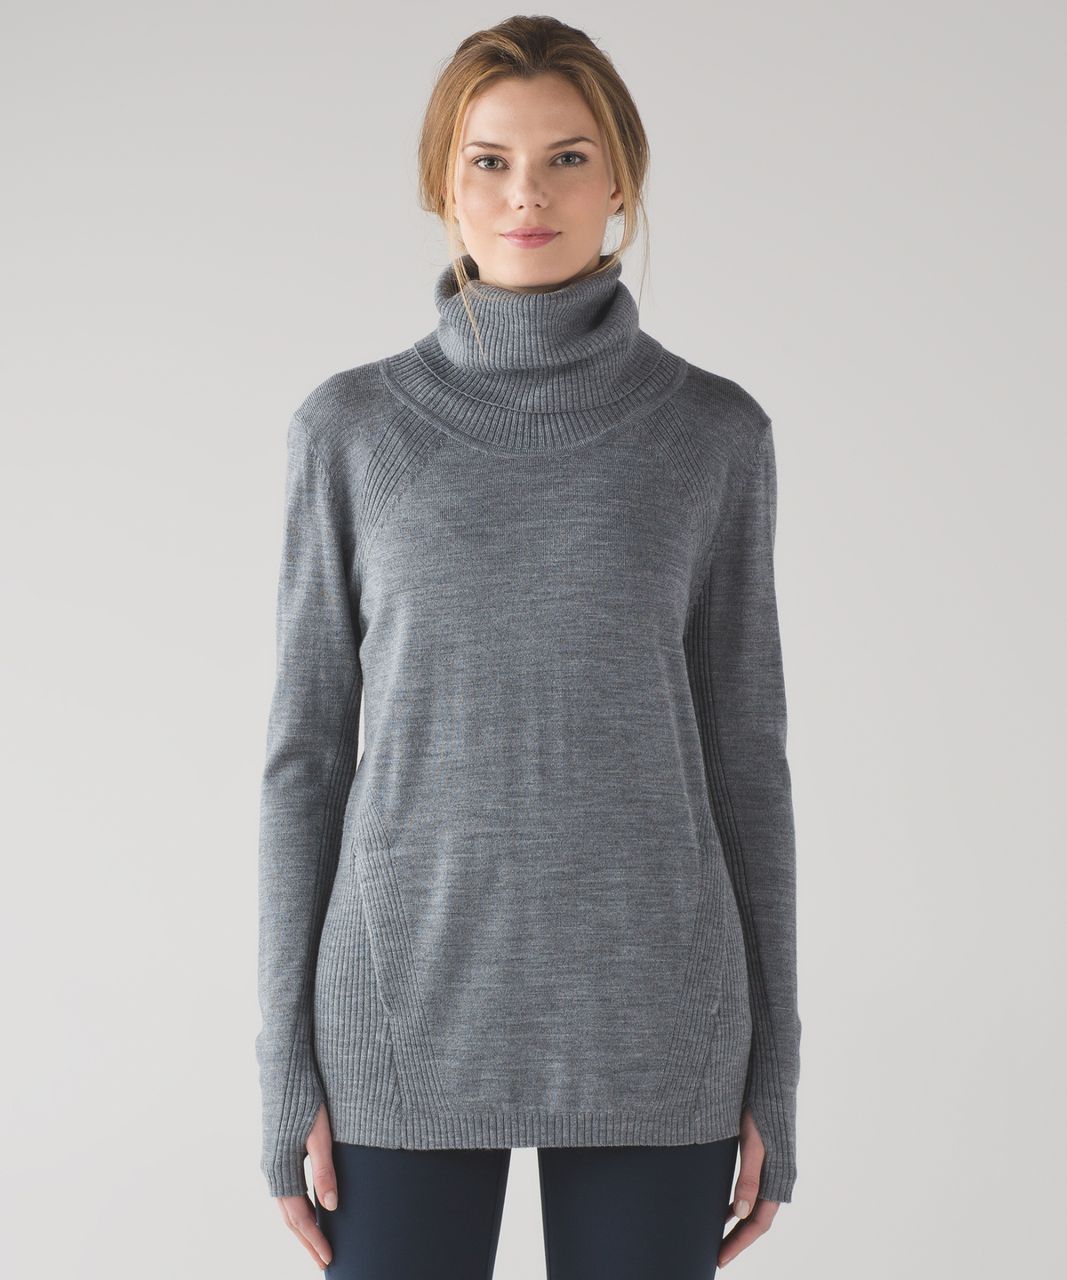 Lululemon Sweat And Savasana Sweater - Heathered Medium Grey